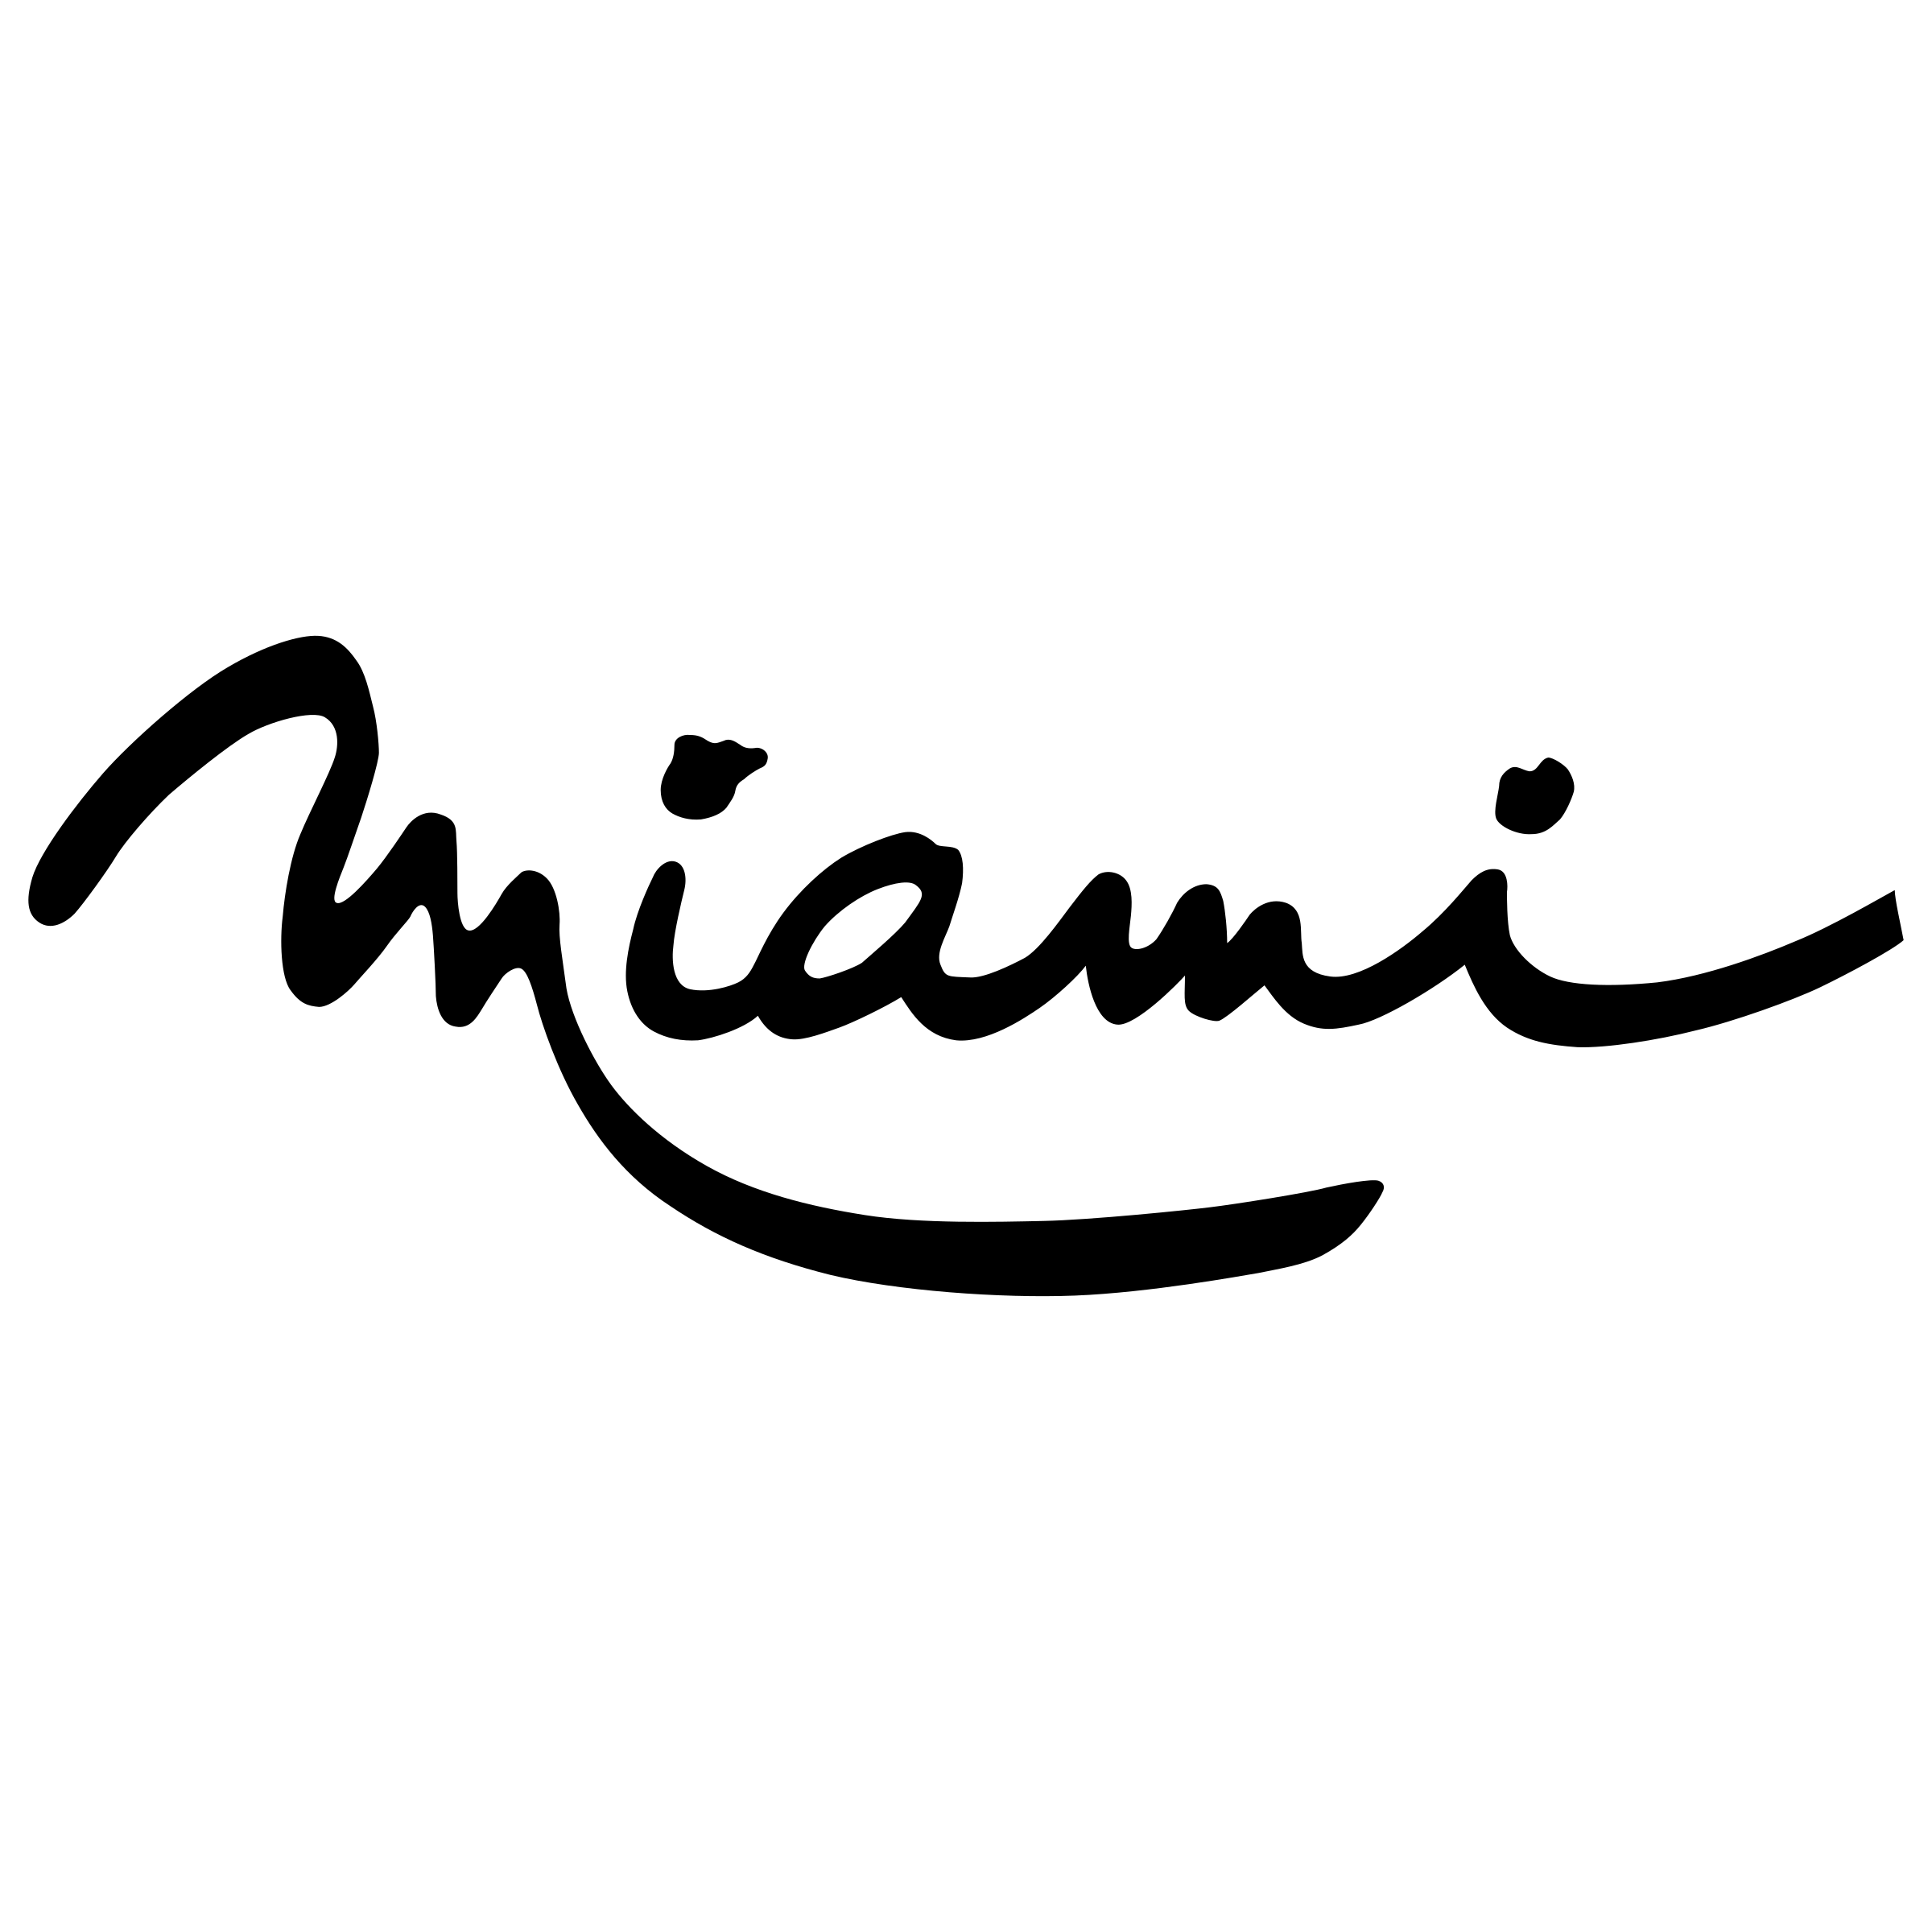 Miami Marlins Logo PNG Transparent & SVG Vector - Freebie Supply